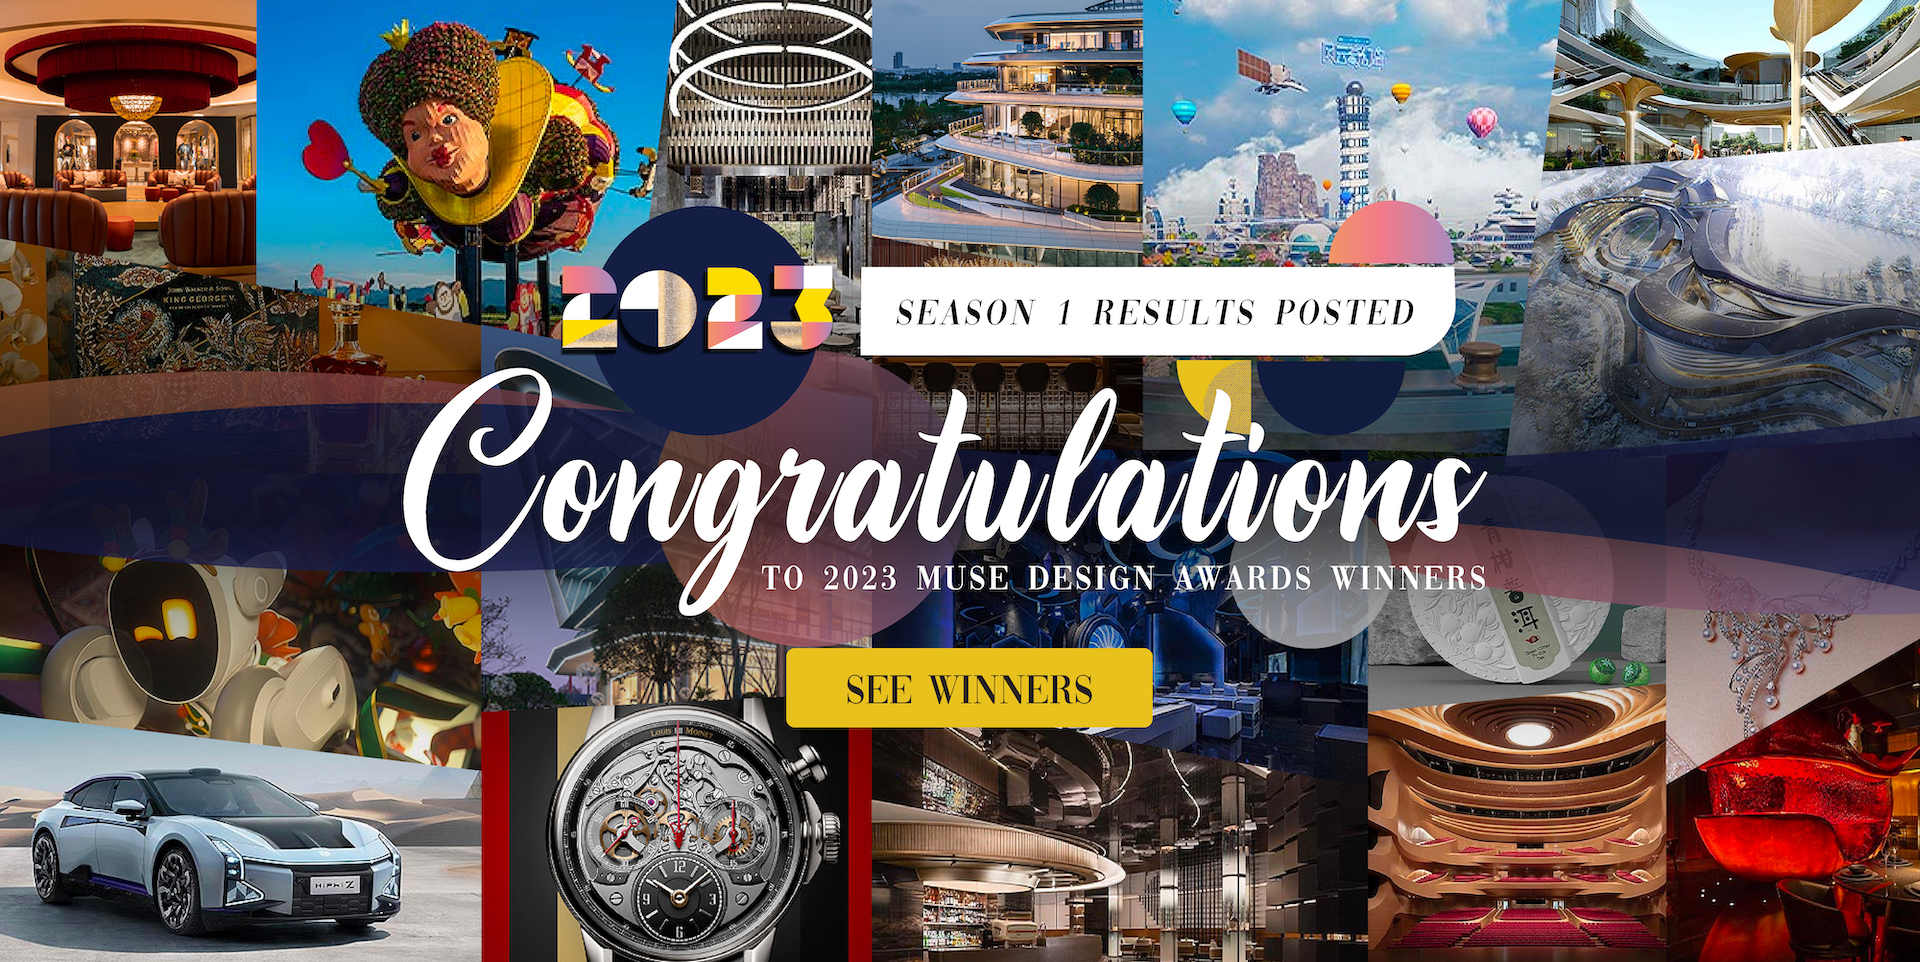 2023 MUSE Design Awards Season 1 Full Results Announced